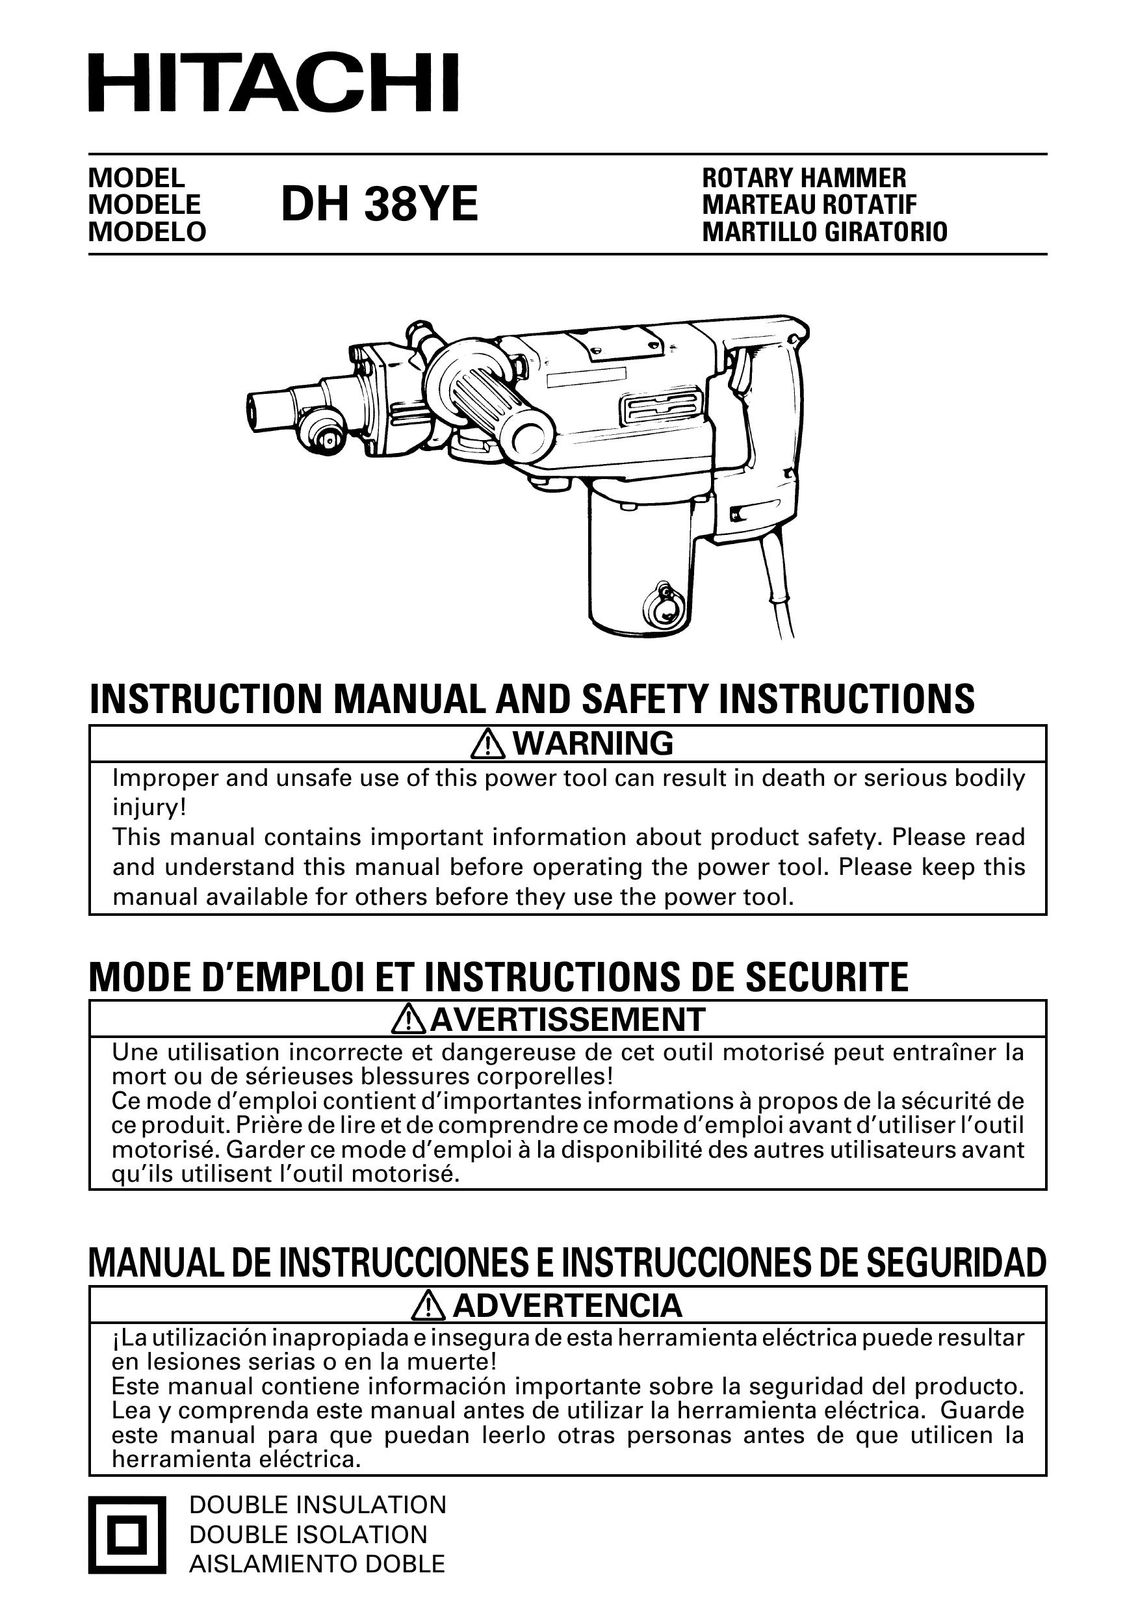 Hitachi DH 38YE Power Hammer User Manual